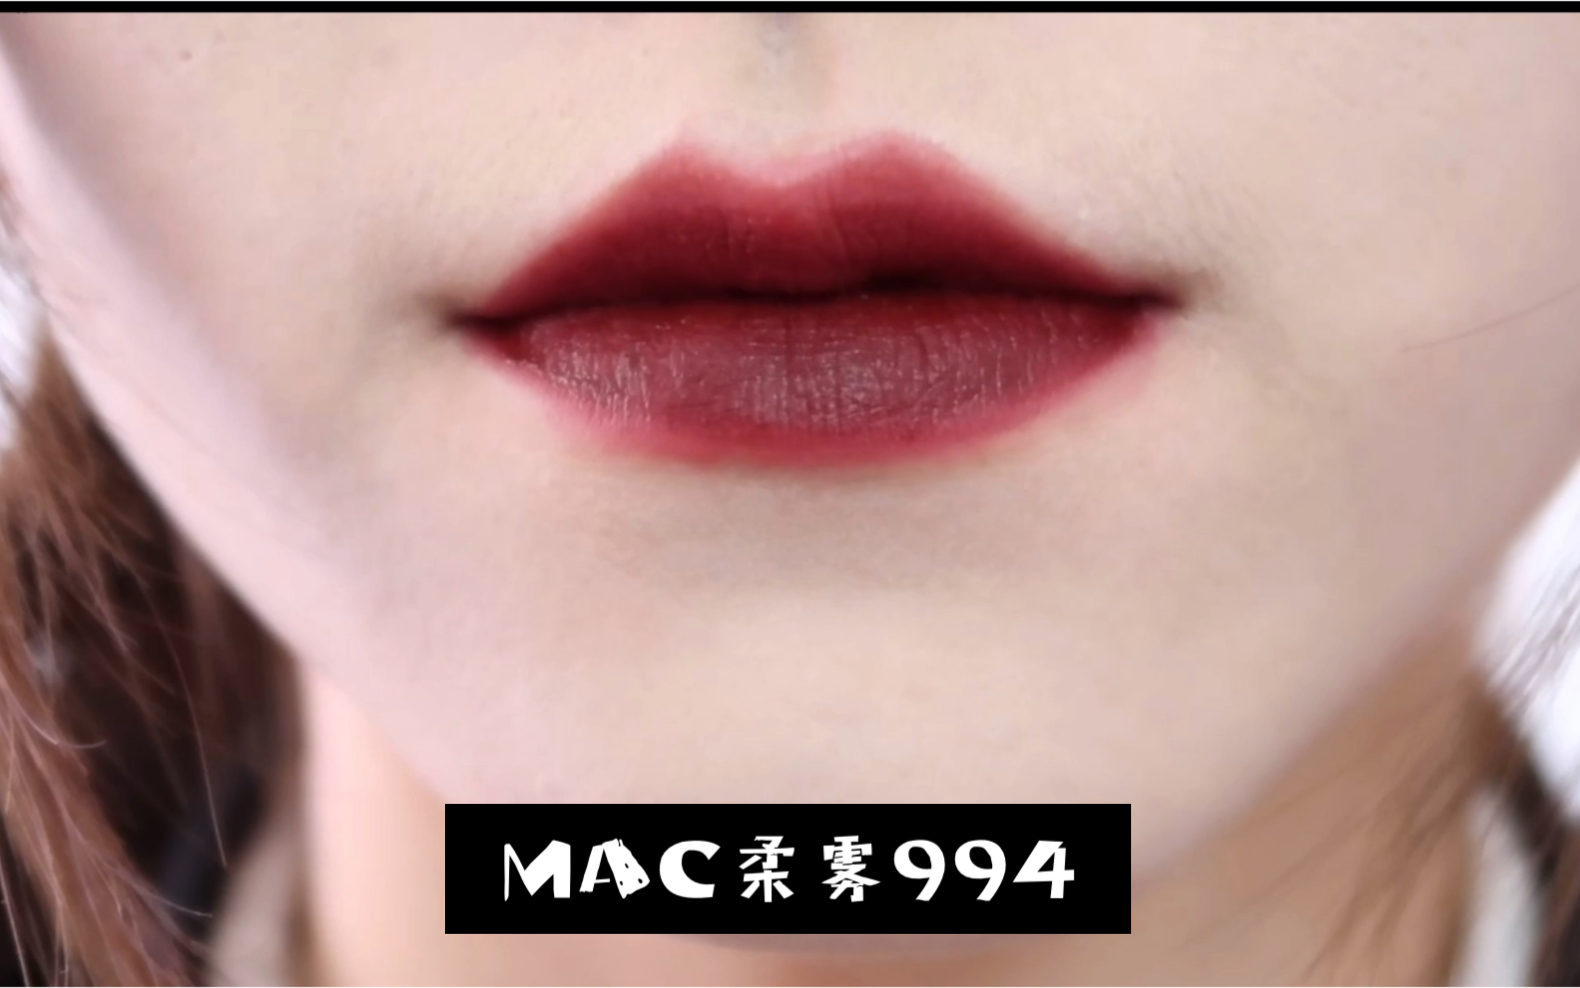 mac994唇釉试色图片